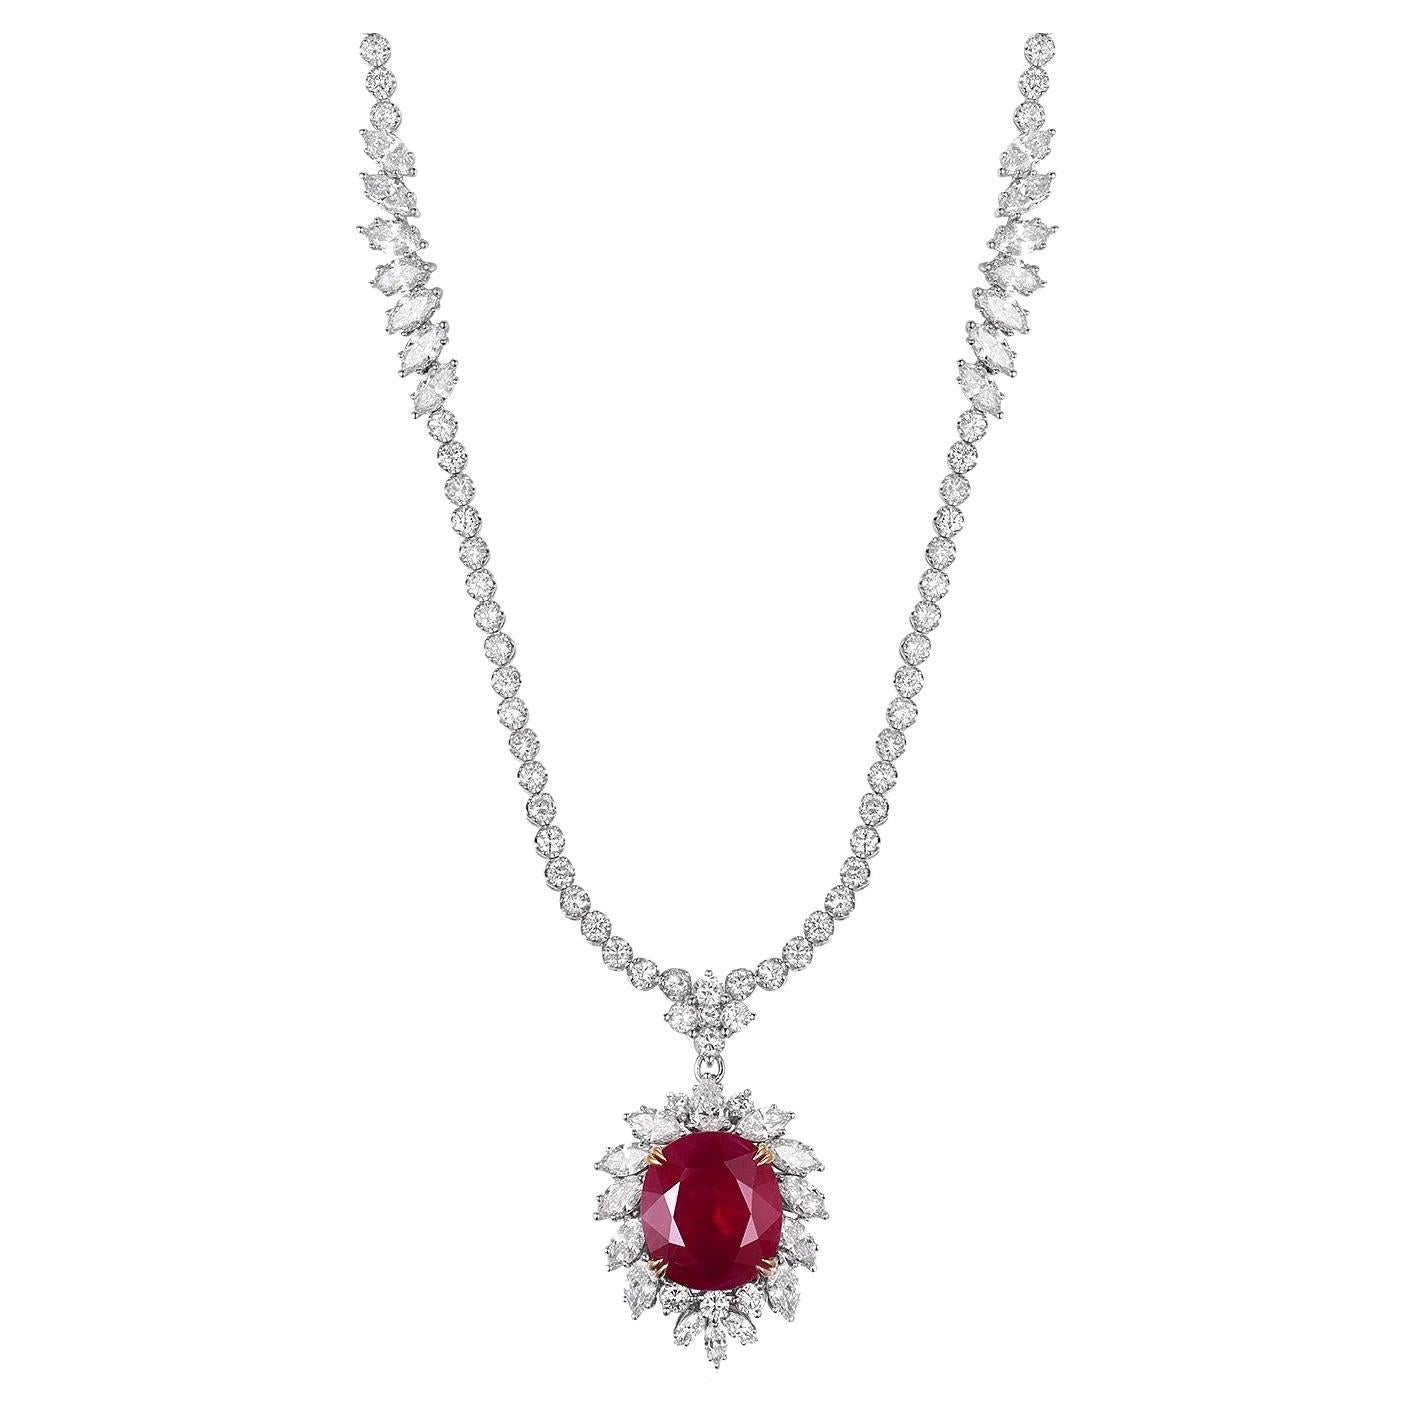 8.61 Carat Burma Ruby Diamond Necklace in 18 Karat White Gold